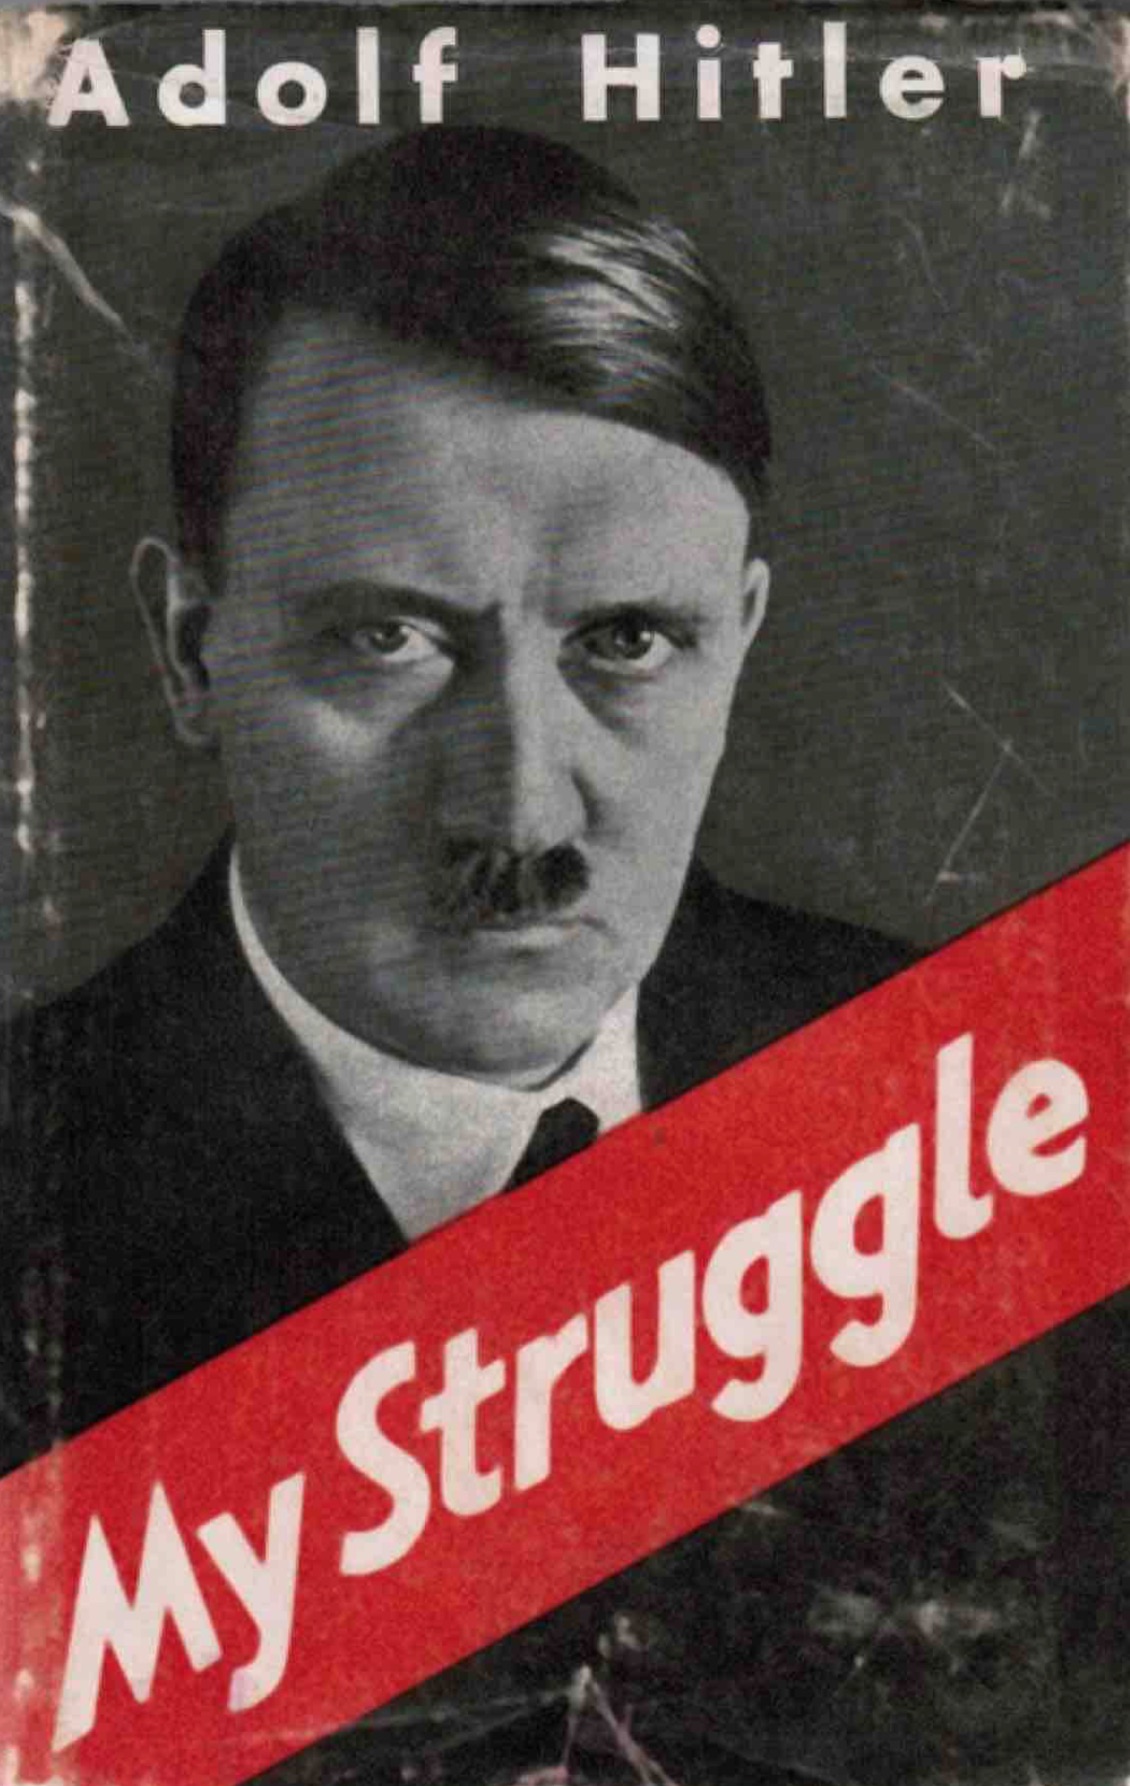 My Struggle (Mein Kampf) by Adolf Hitler - Stalag Edition (1940) by Adolf Hitler